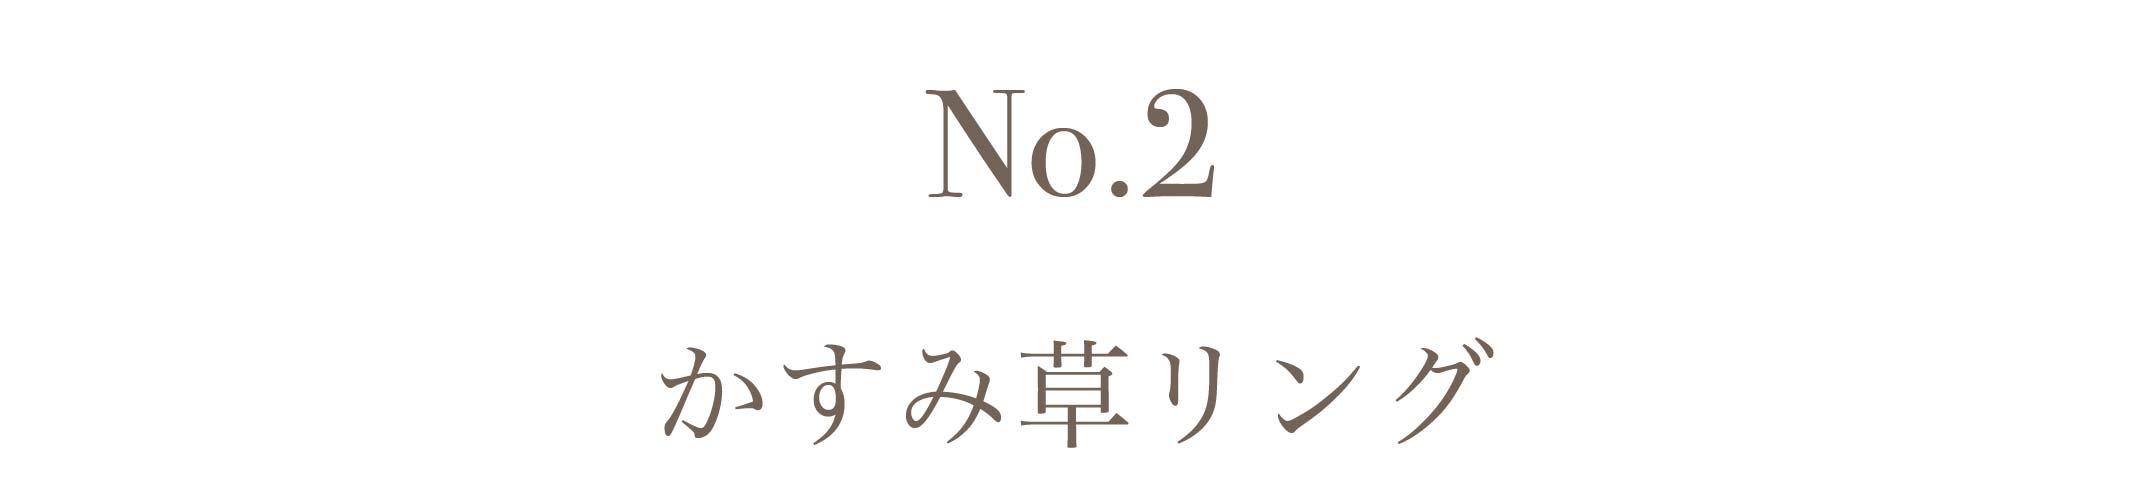 No.2かすみ草